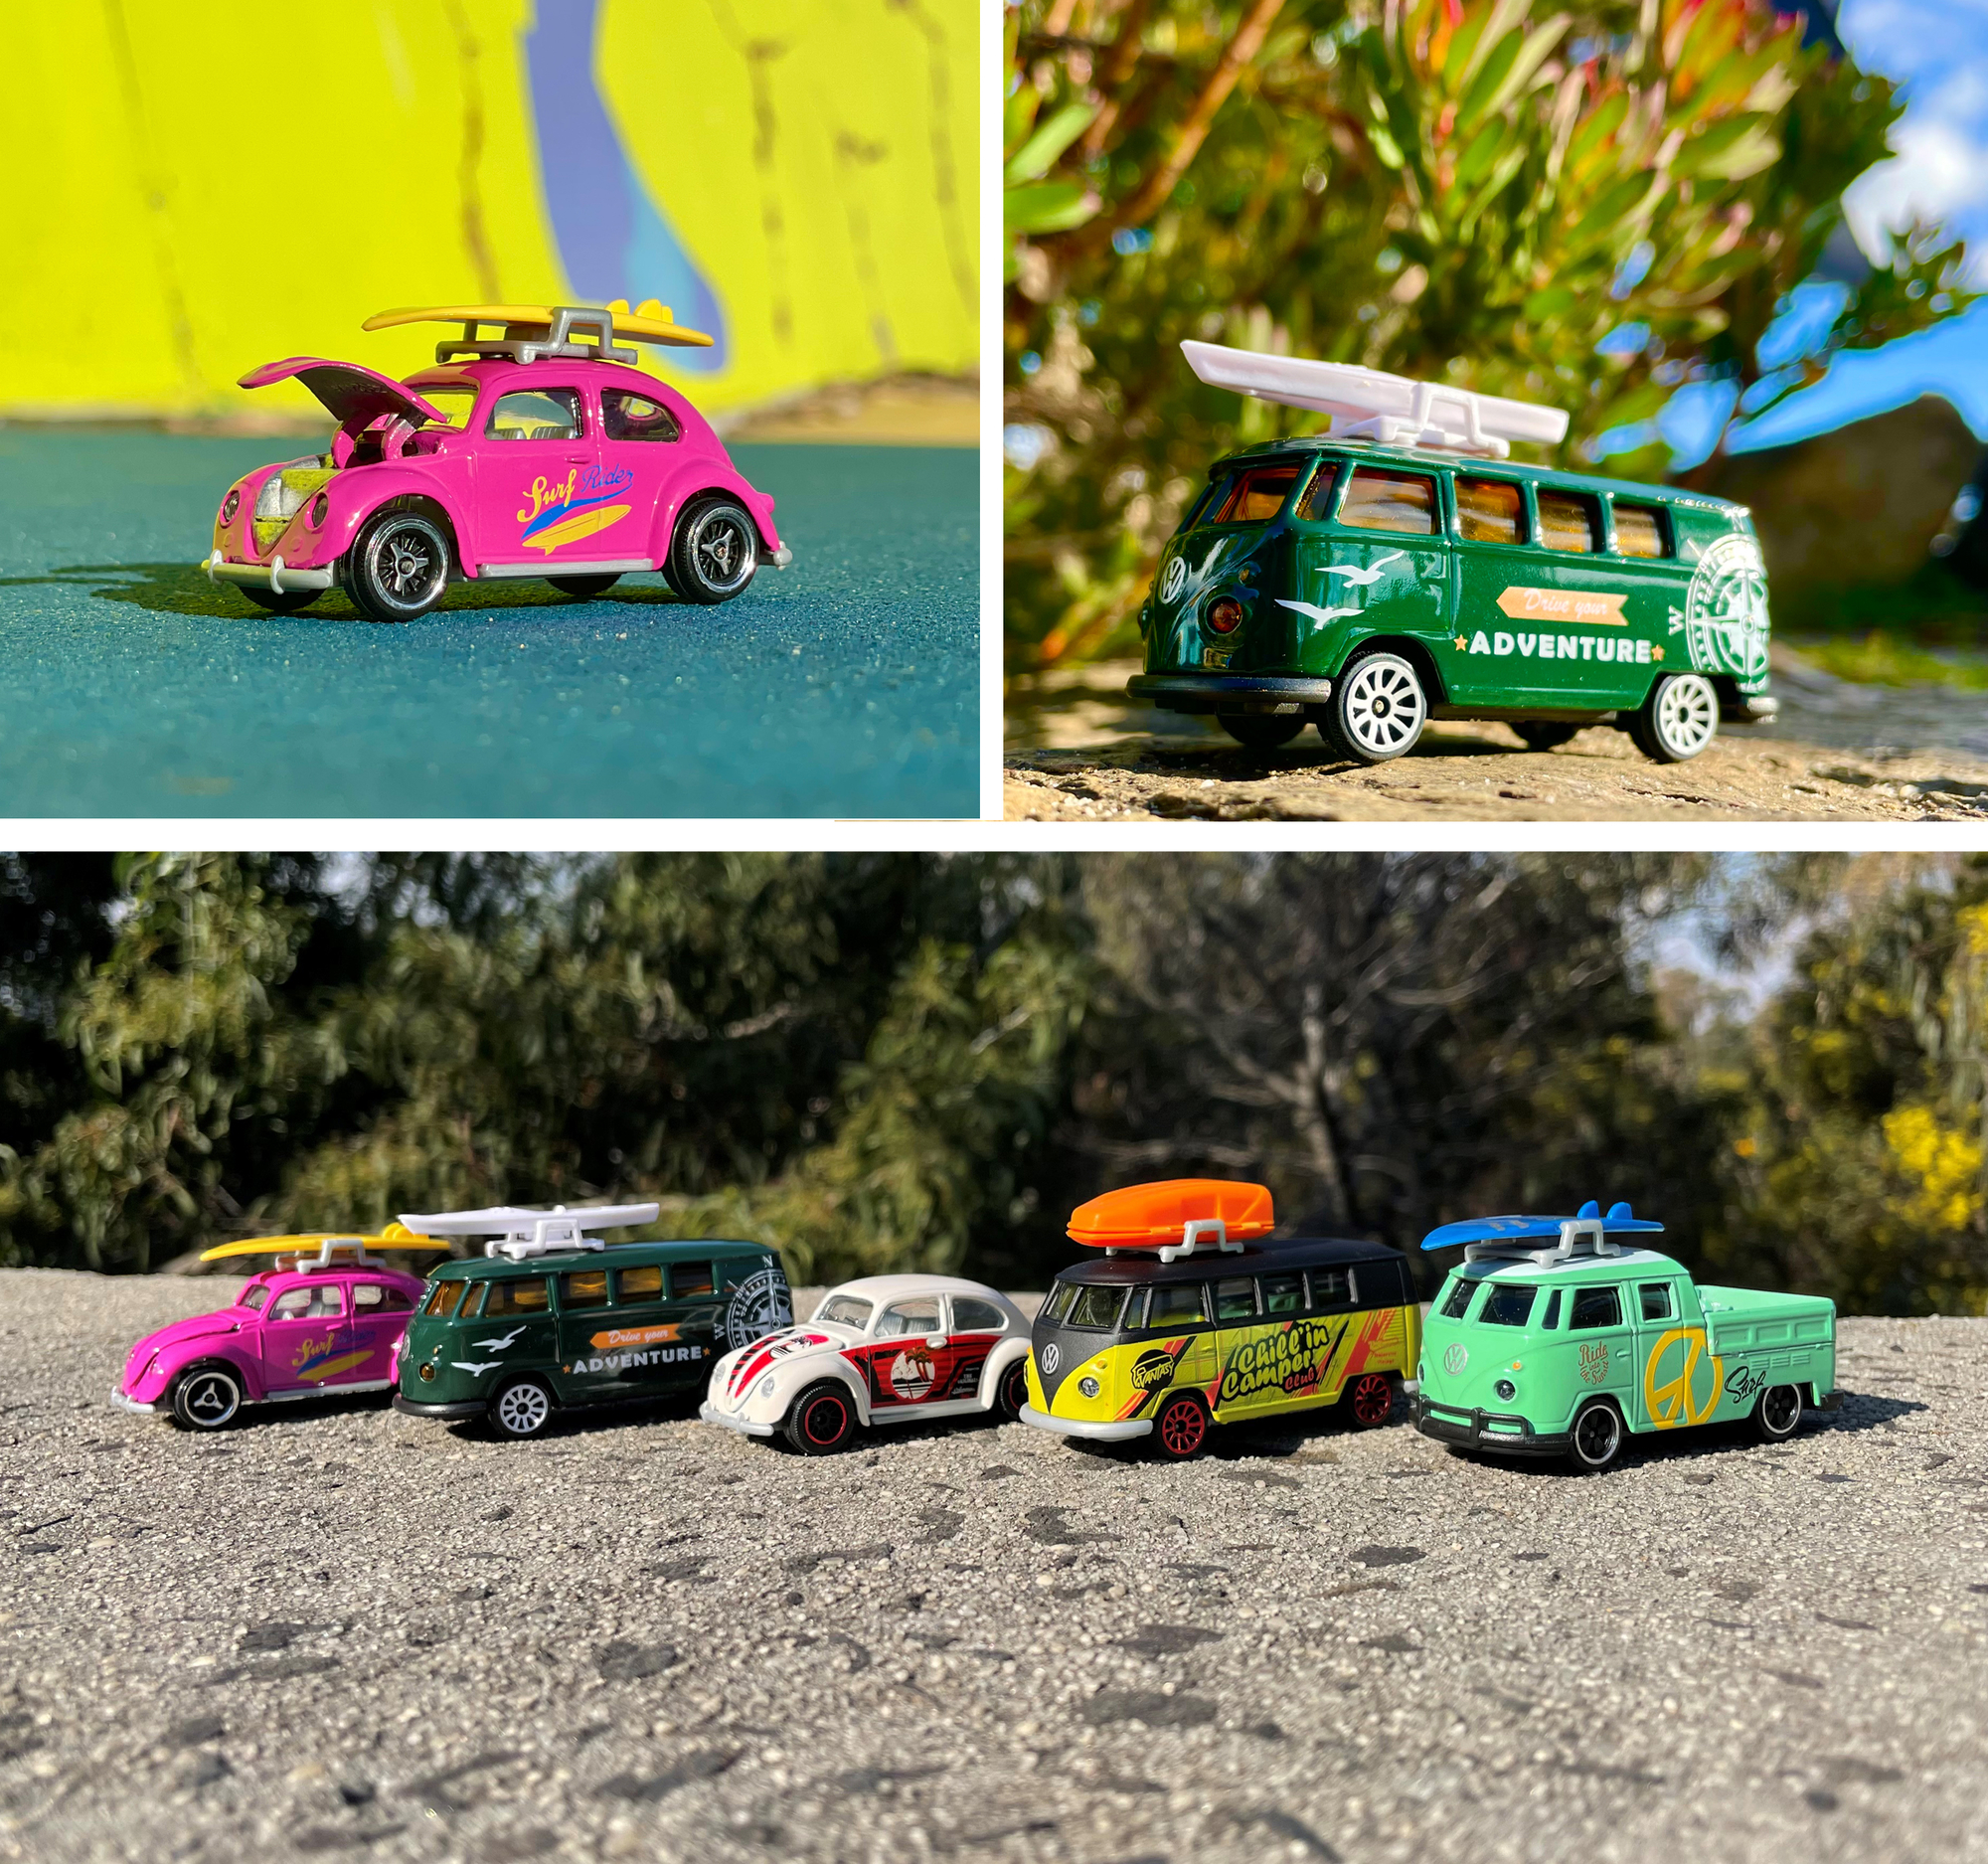 MAJORETTE Teile Spielzeugauto VW 5 The Set Mehrfarbig Originals